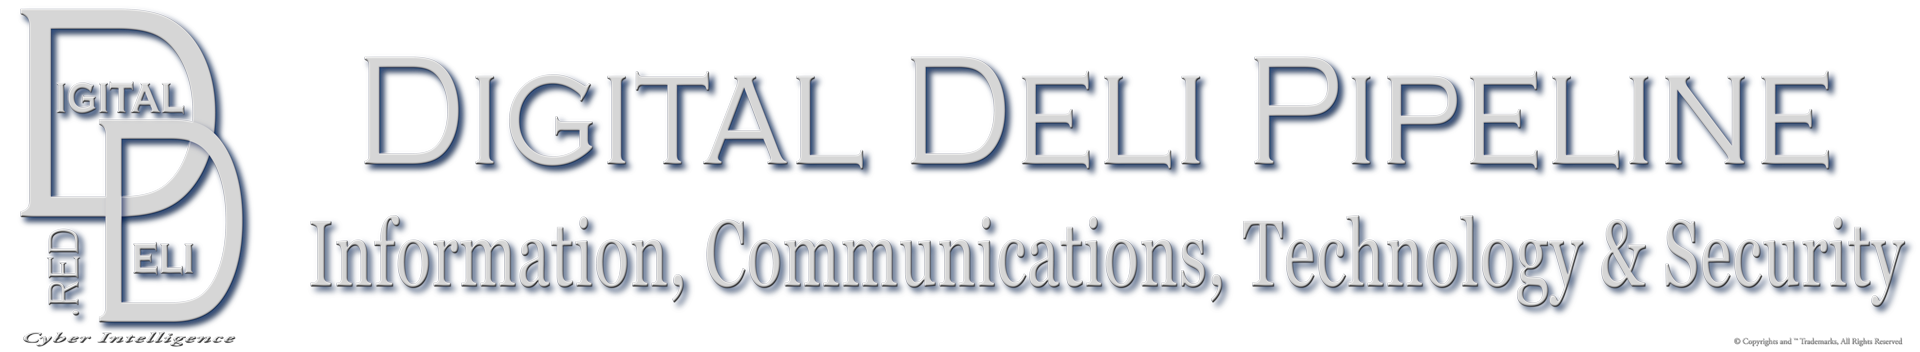 DigitalDeli.red Properties & Brands Imprint, Digital Deli Pipeline